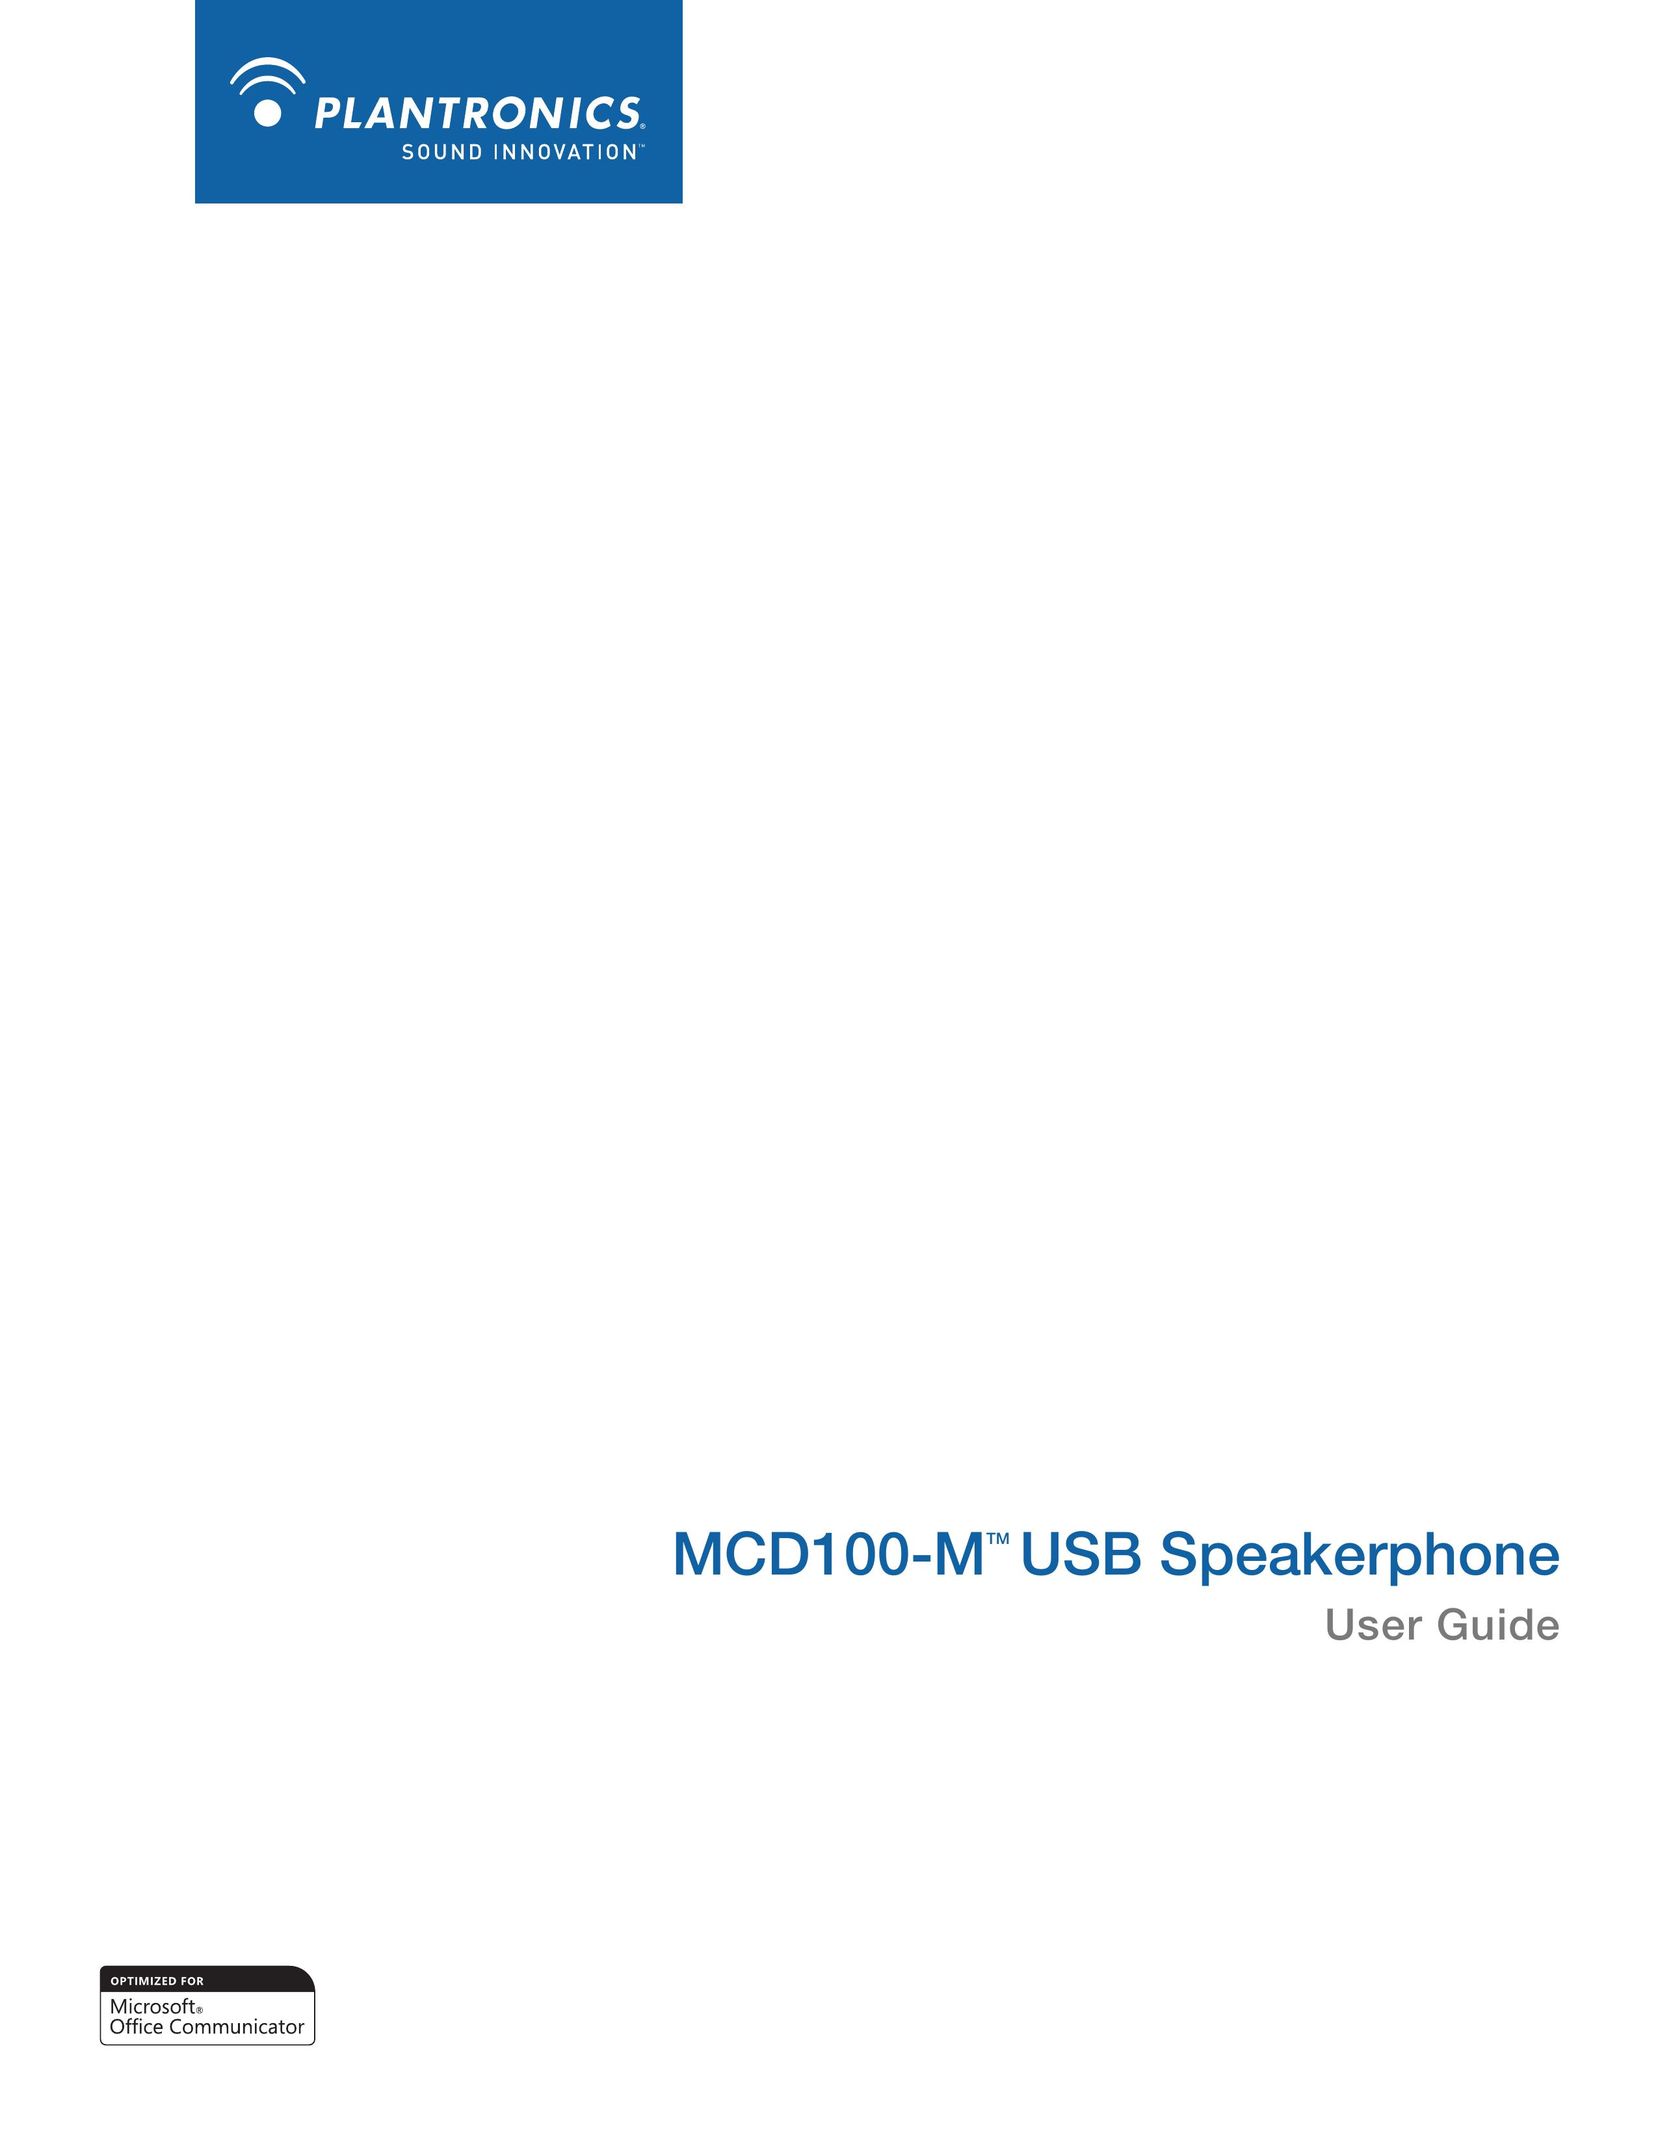 Plantronics MCD100-M Conference Phone User Manual